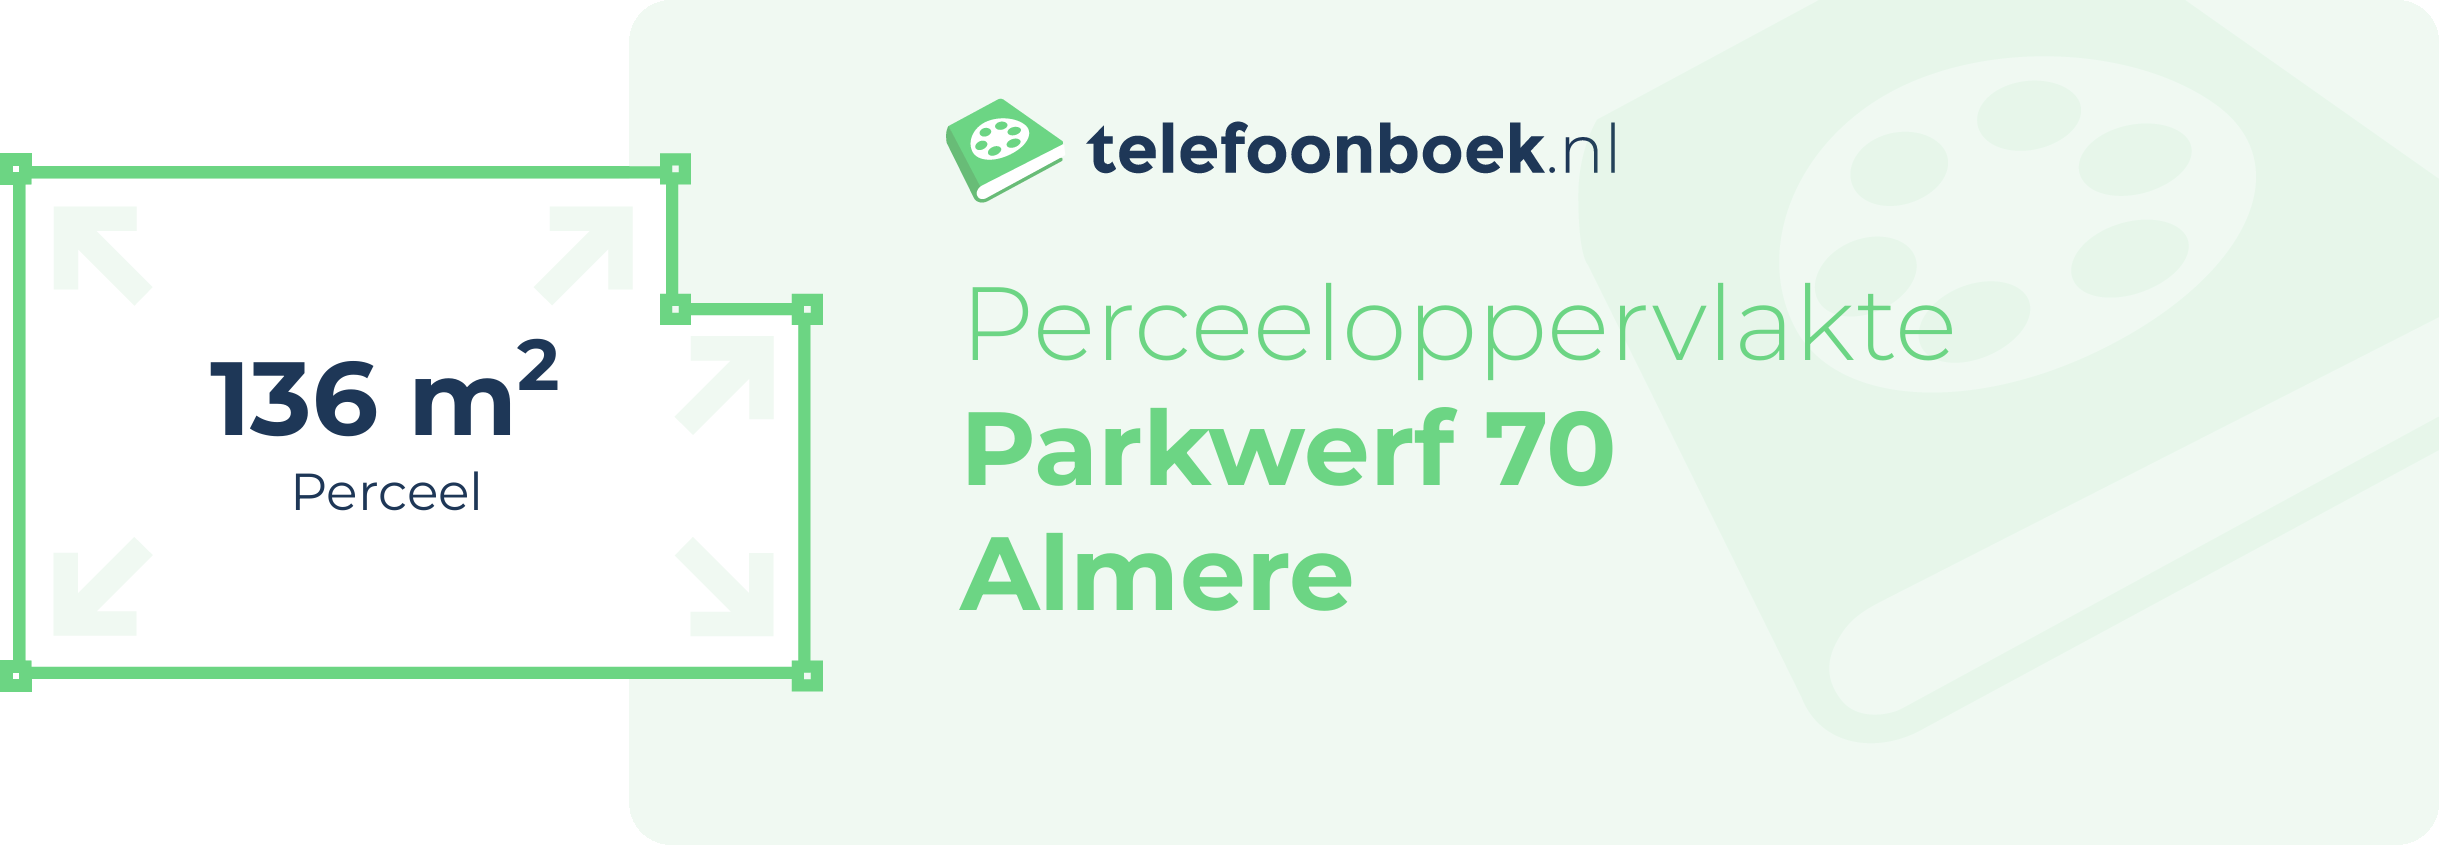 Perceeloppervlakte Parkwerf 70 Almere